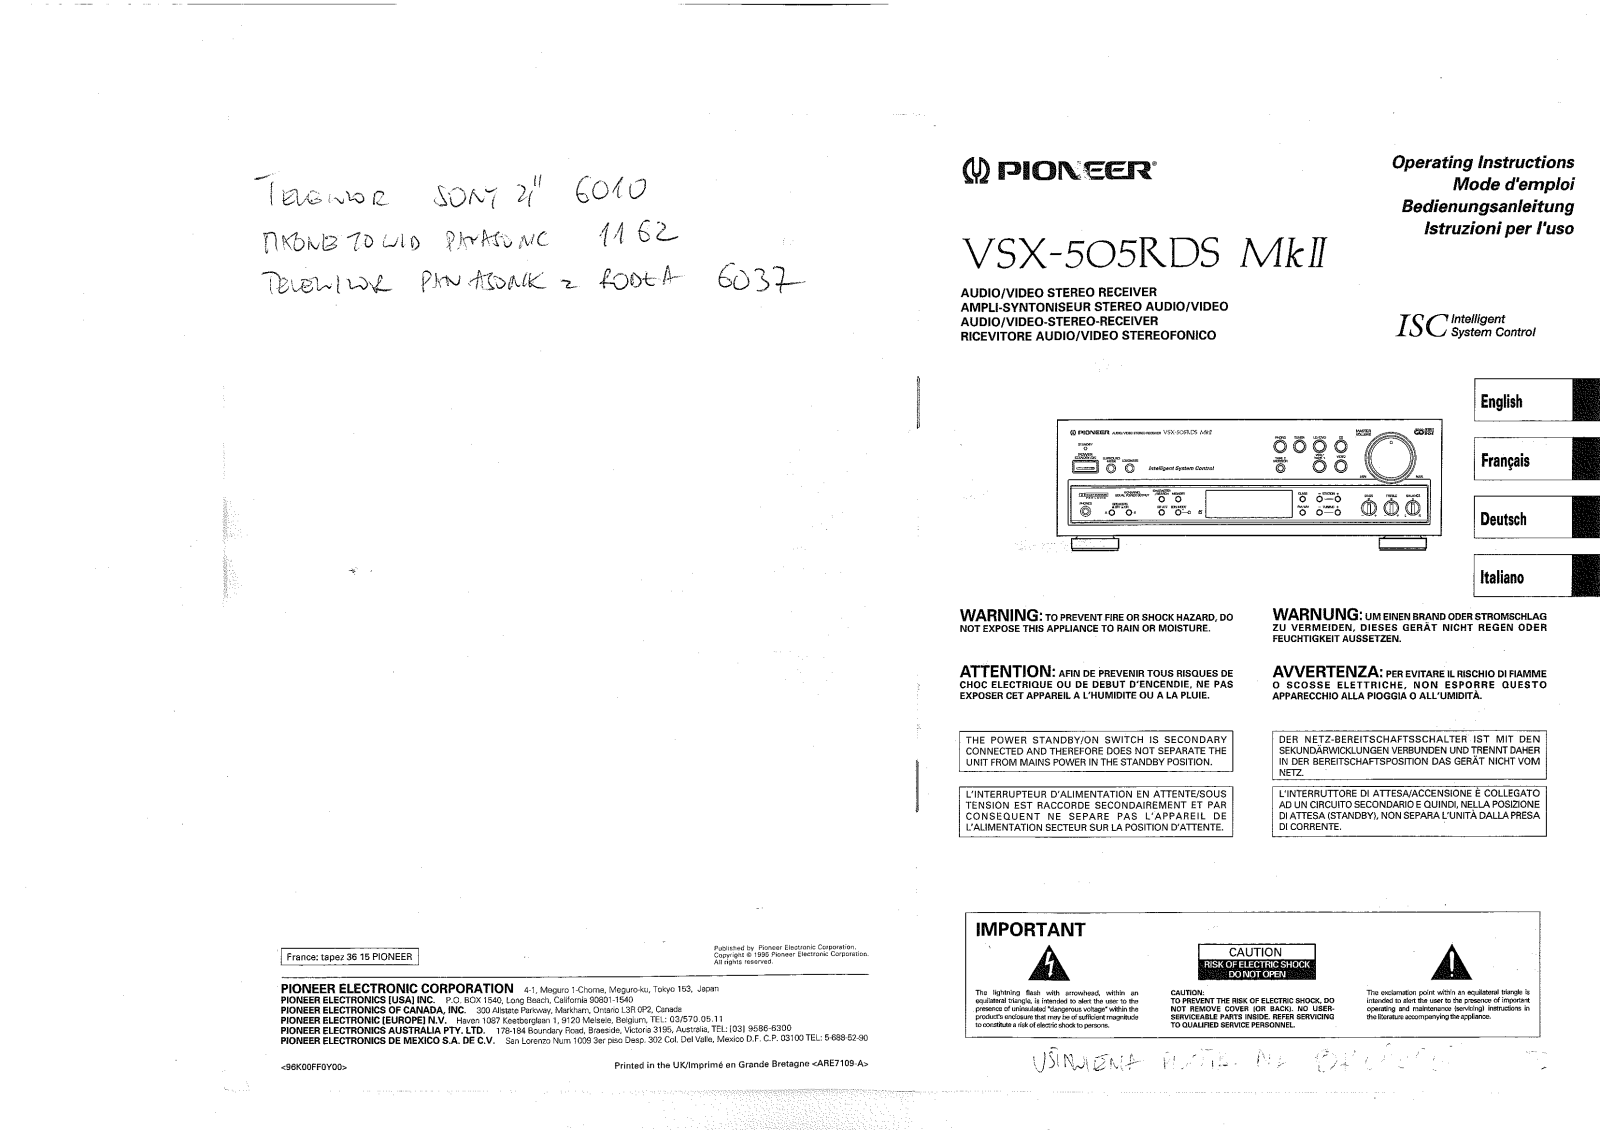 PIONEER VSX-505RDS MHII User Manual